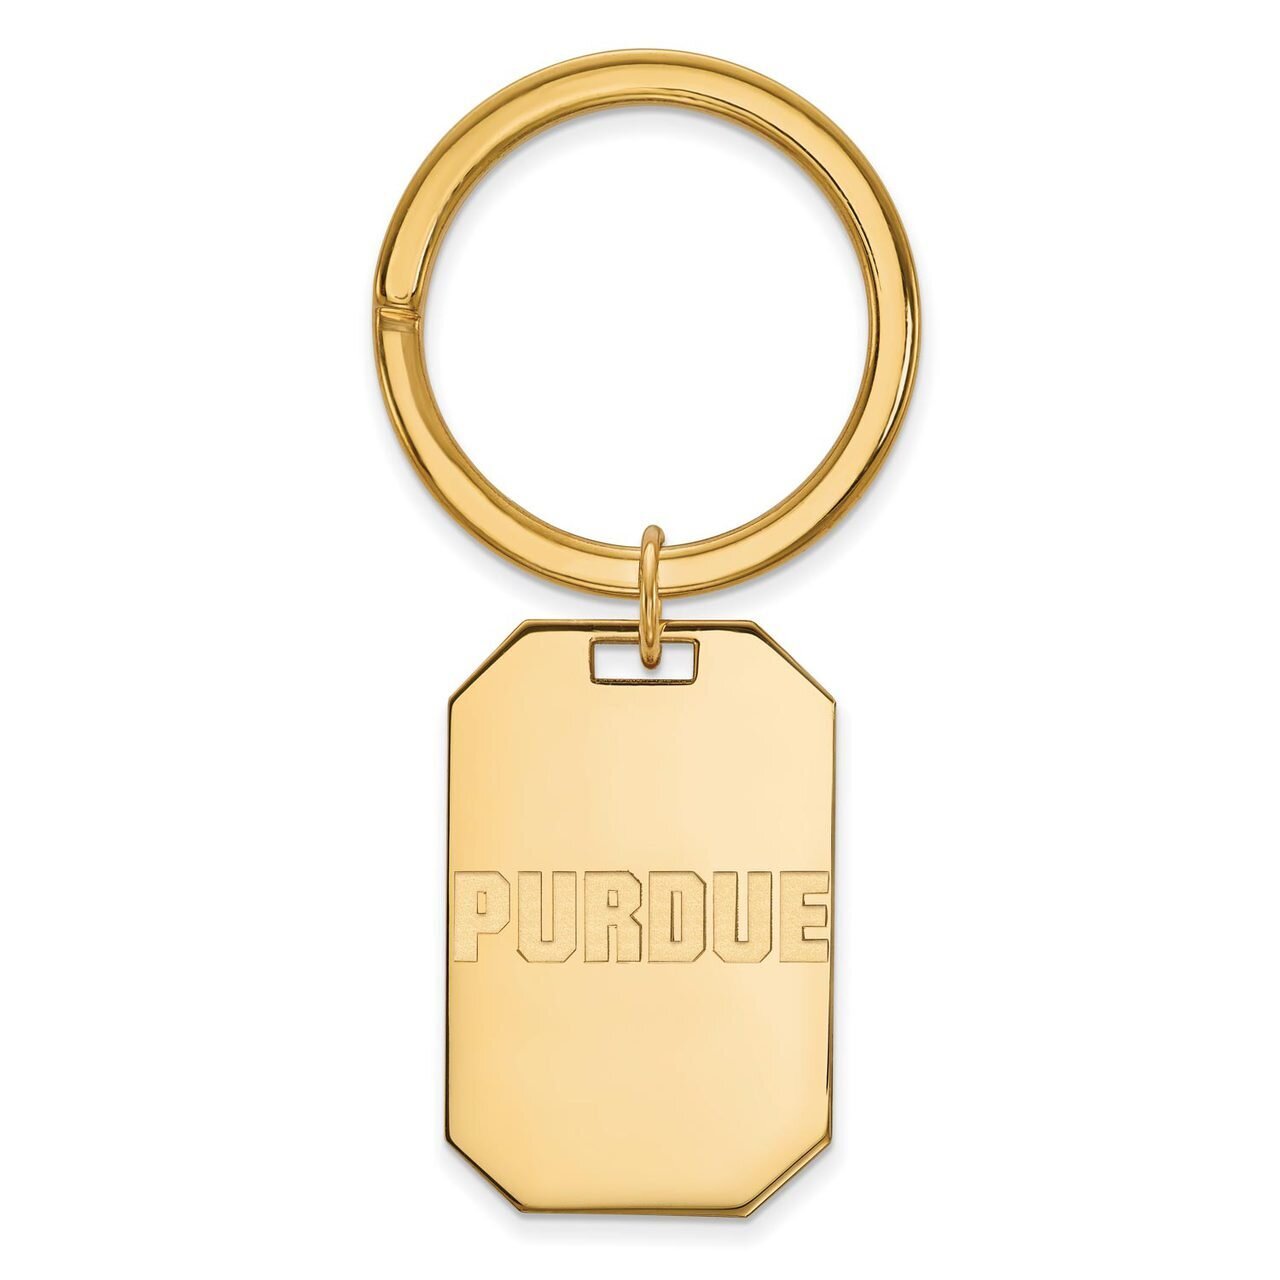 Purdue Key Chain Gold-plated Silver GP072PU